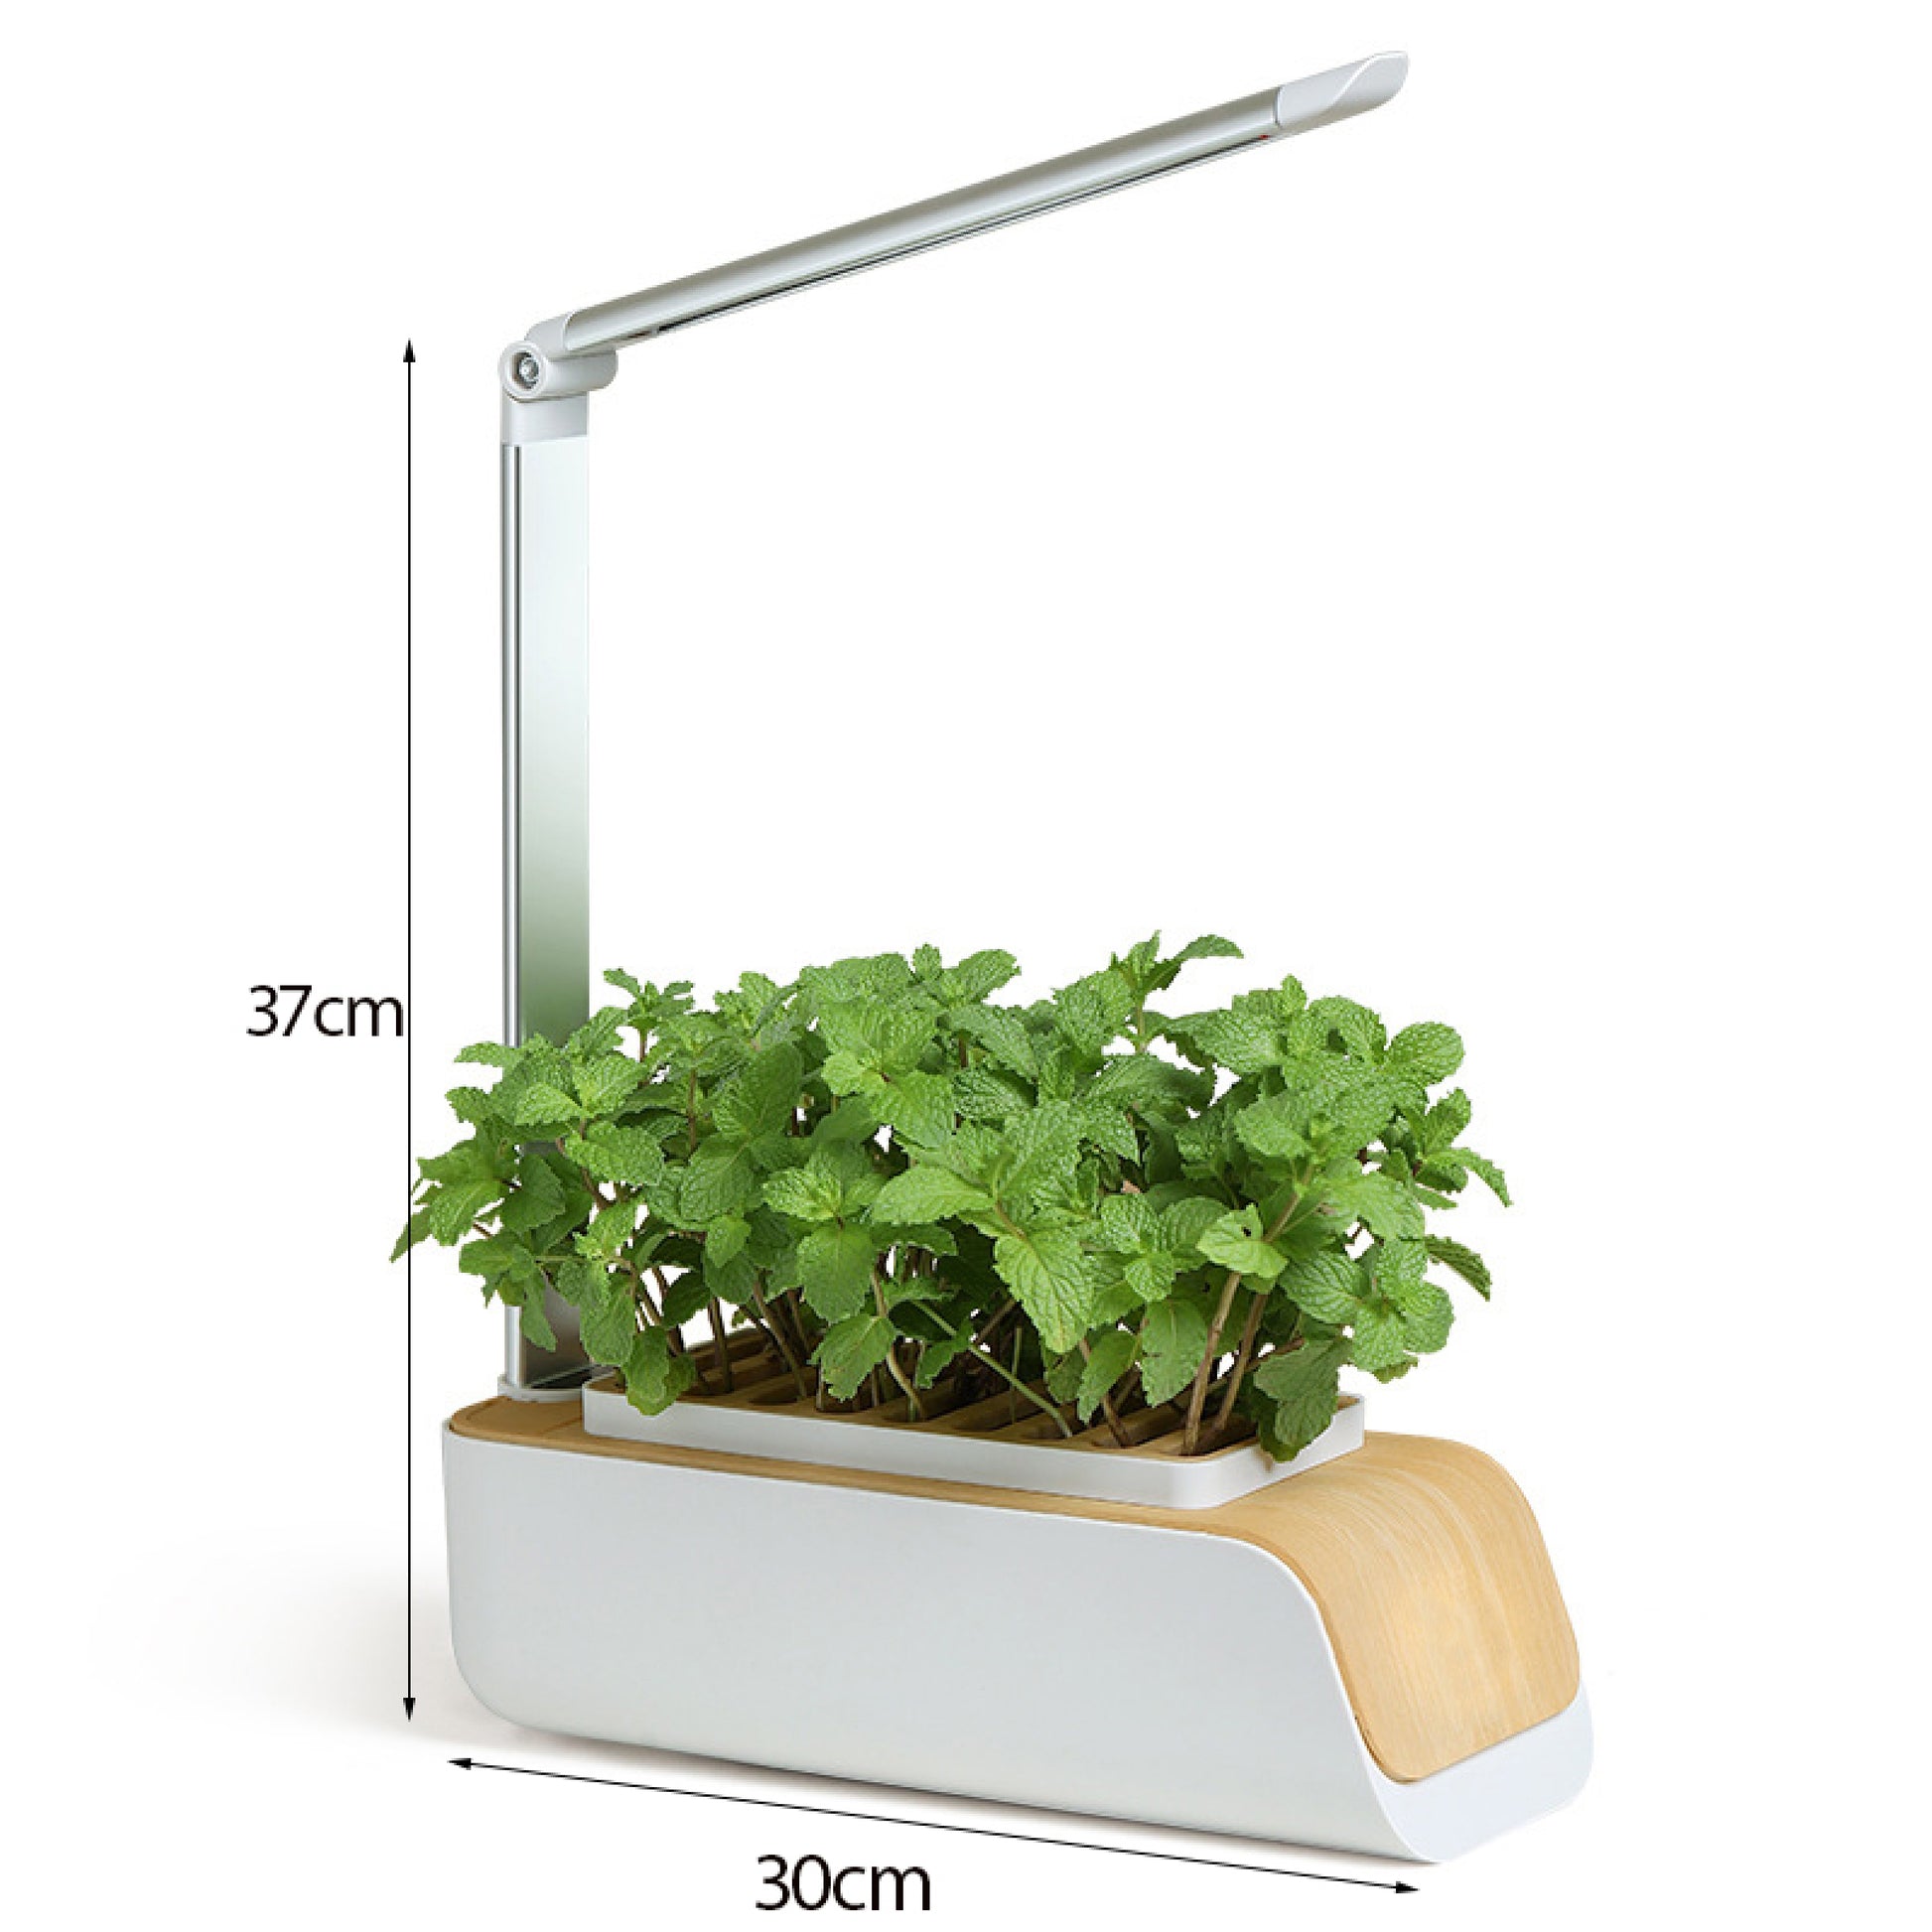 Adjustable light height and options Verdmo smart gardeneasy to use grow anything 